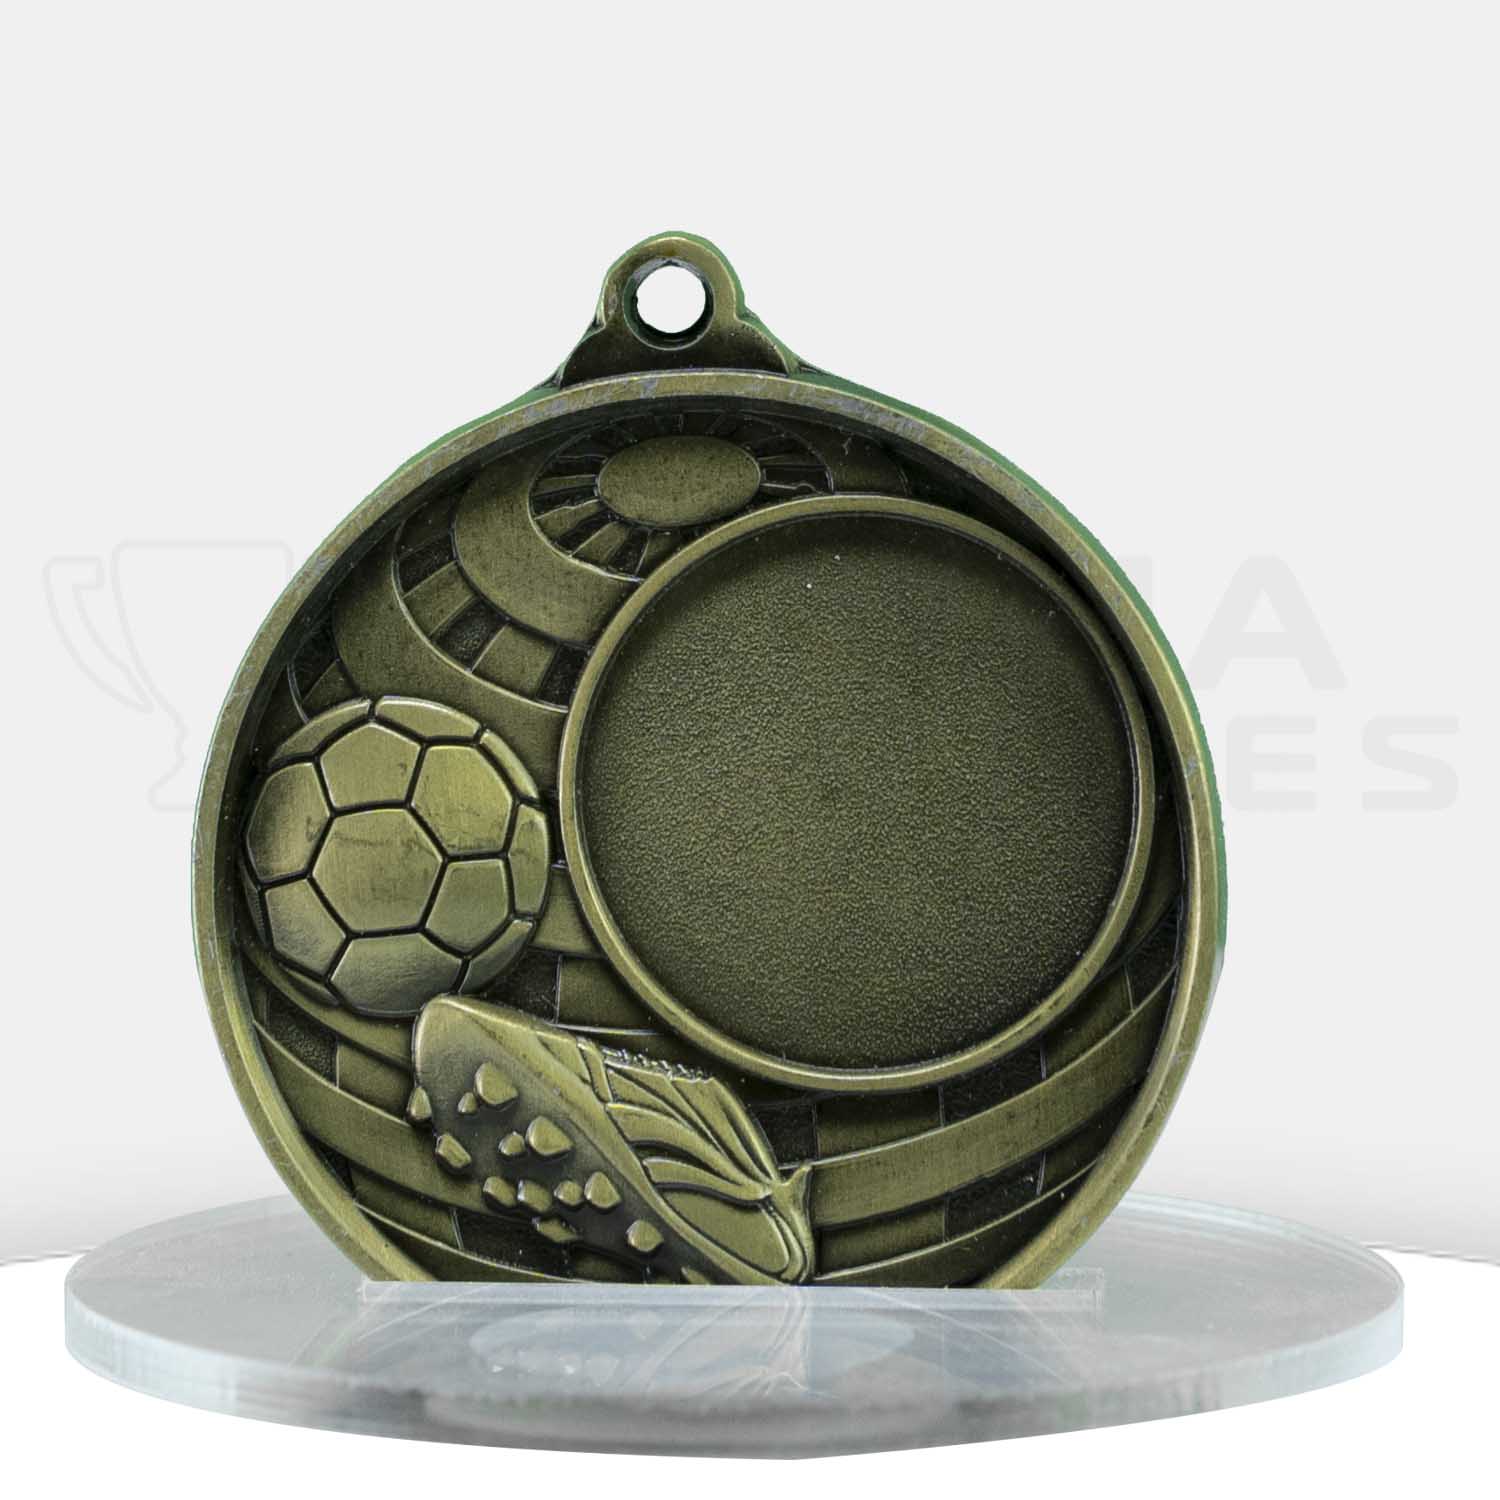 global-soccer-logo-medal-1073c-9g-front